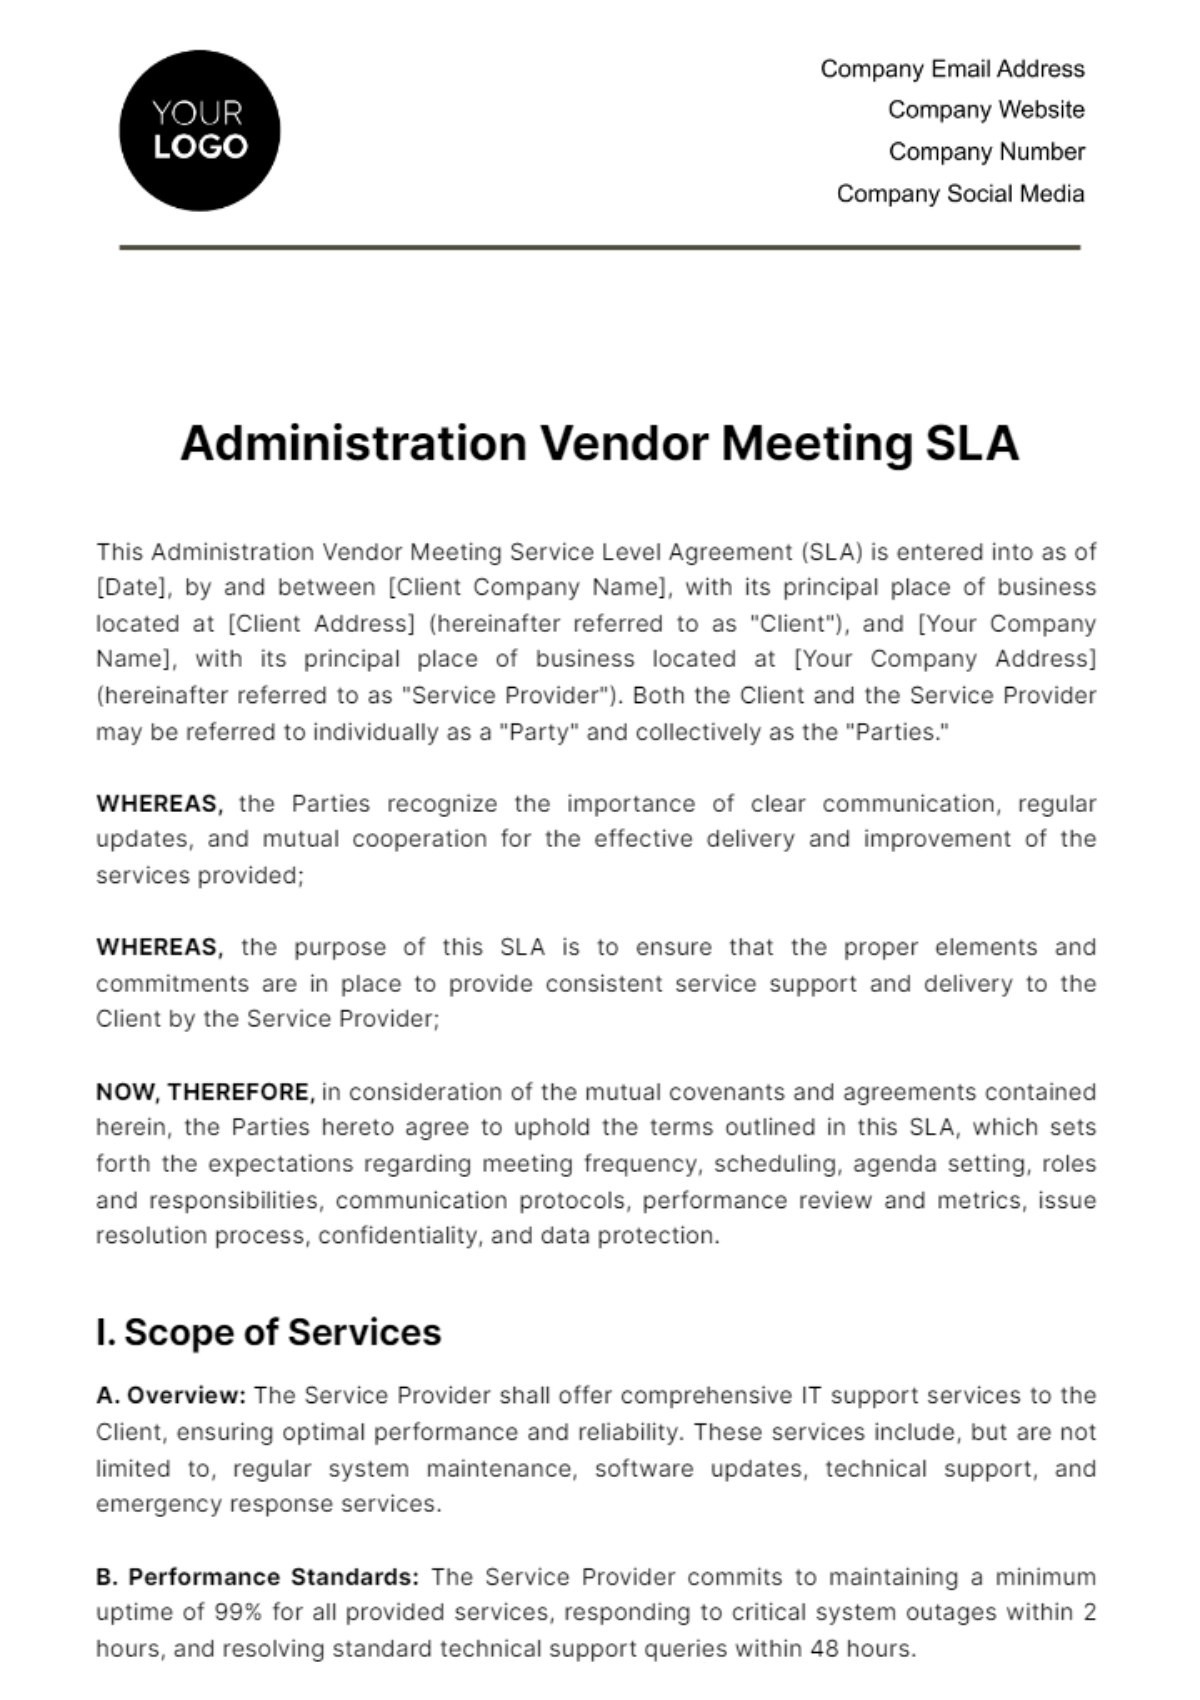 Free Administration Vendor Meeting SLA Template